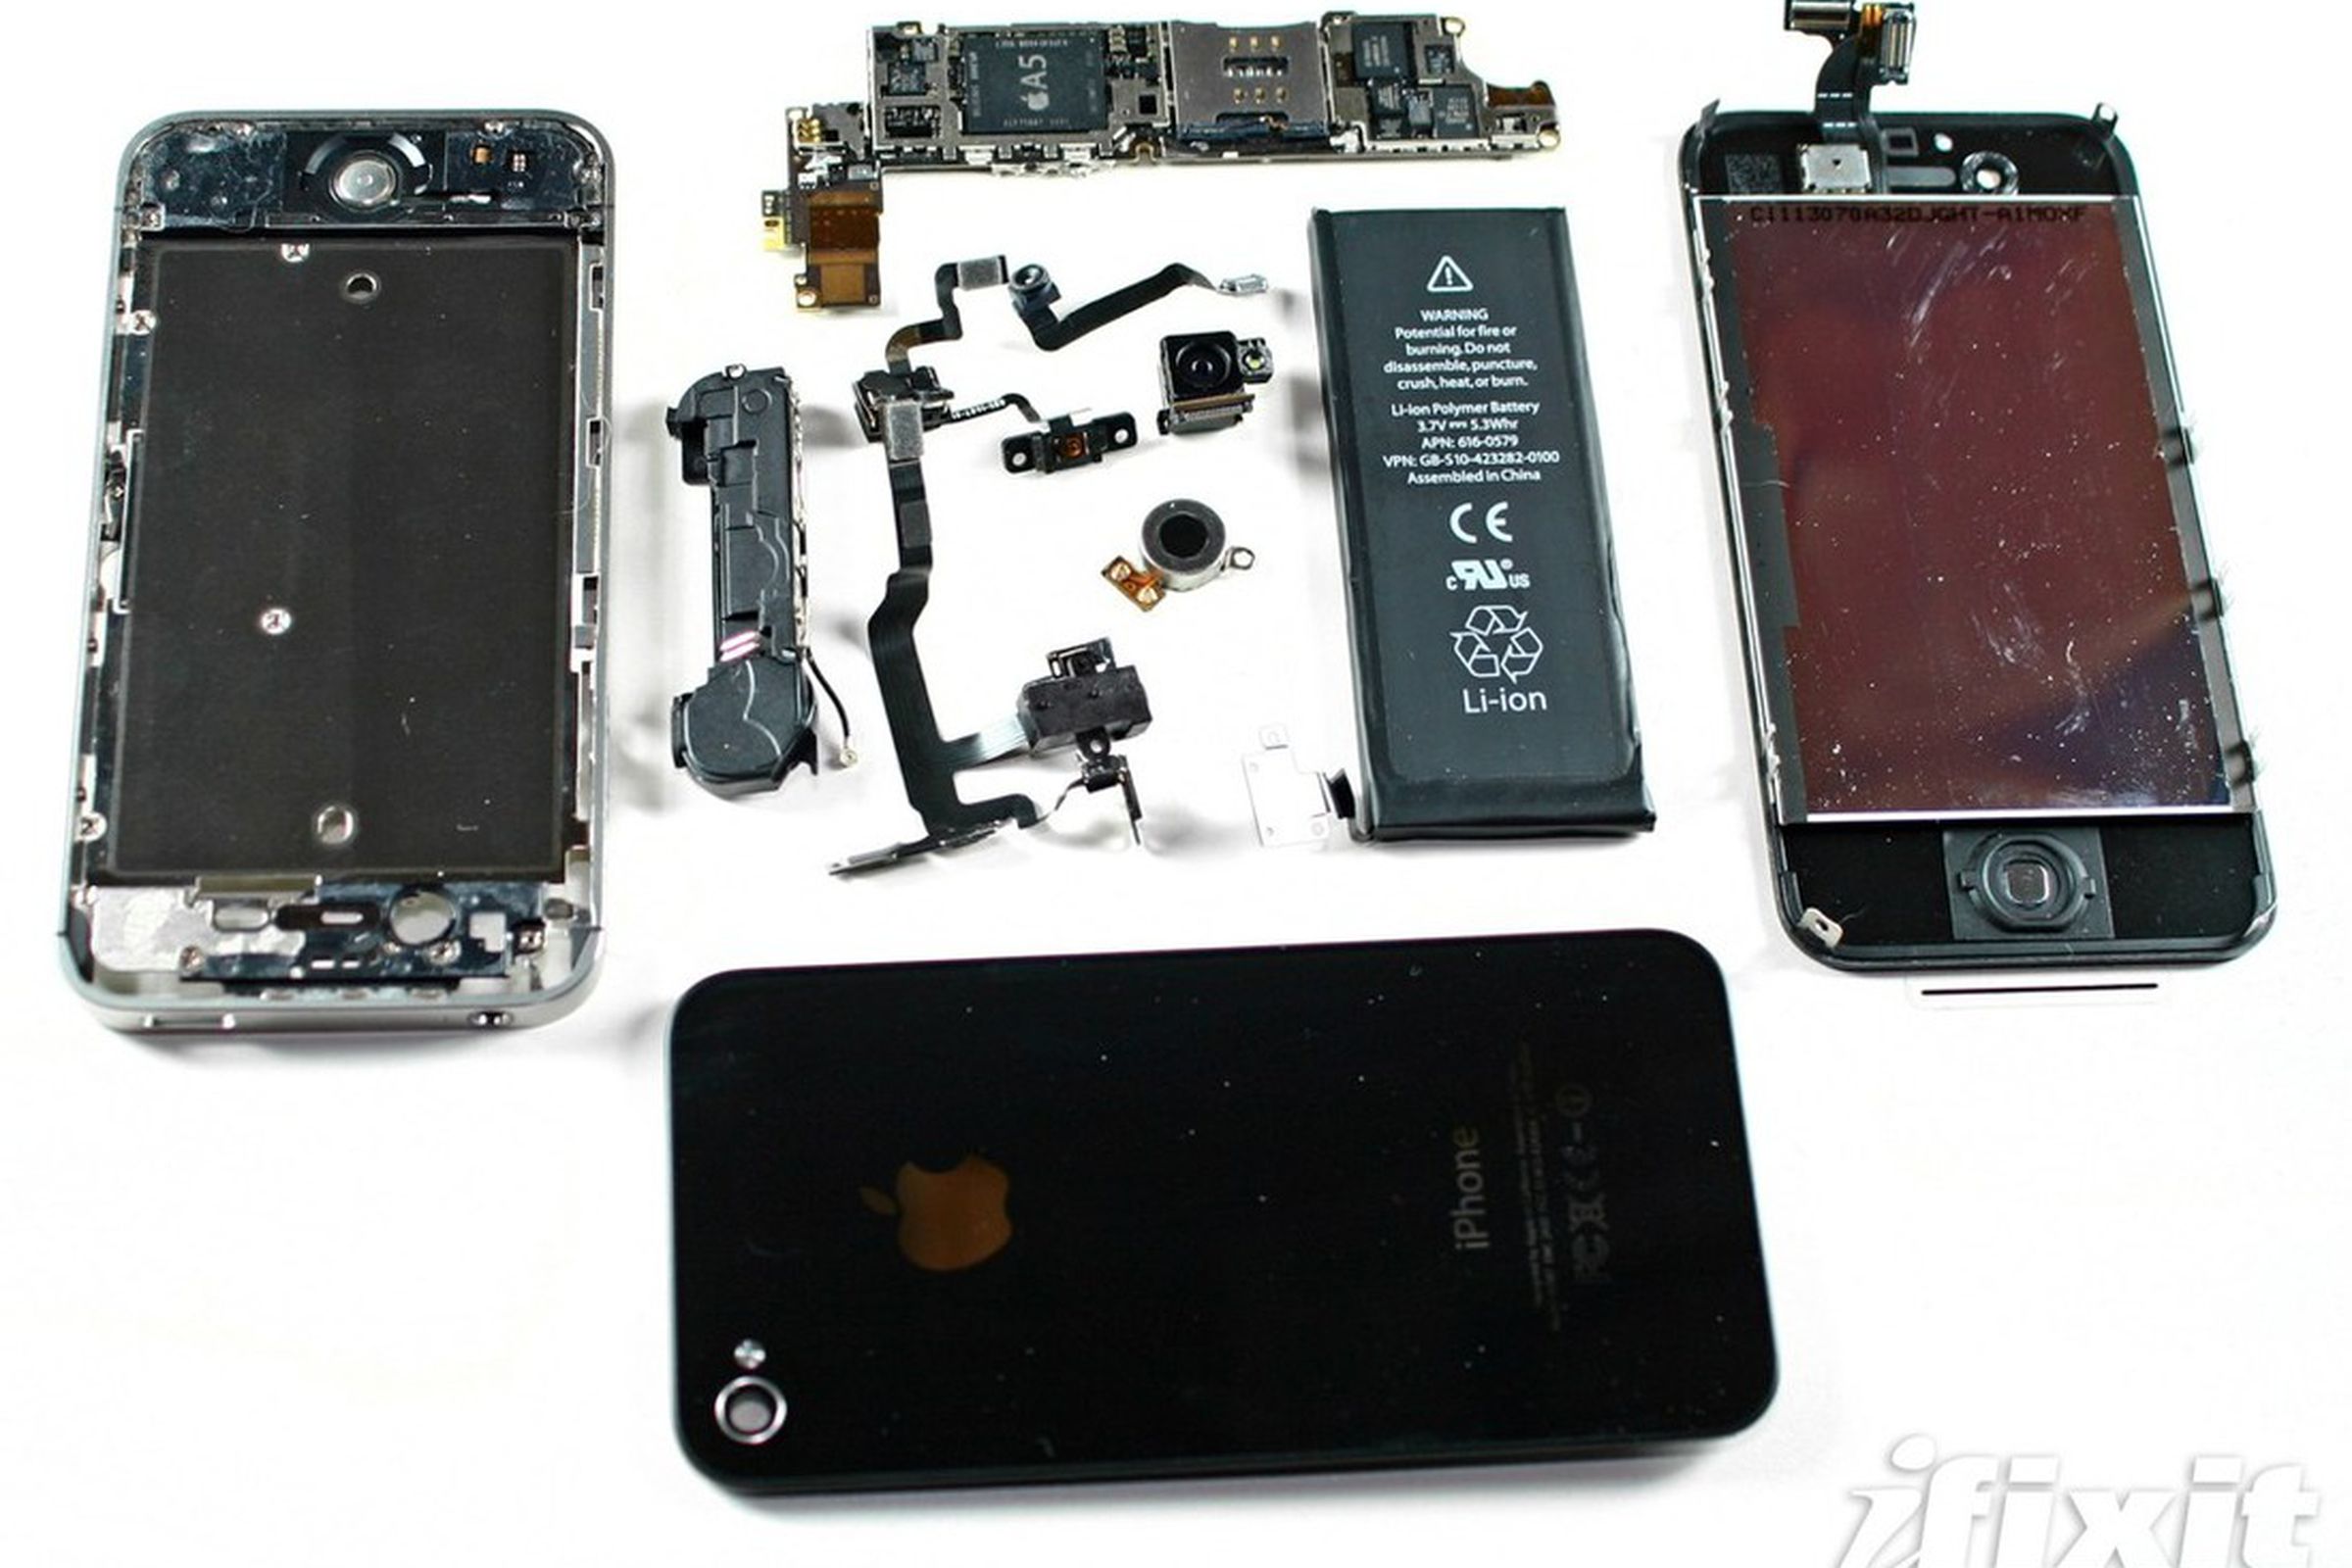 iPhone 4S teardown